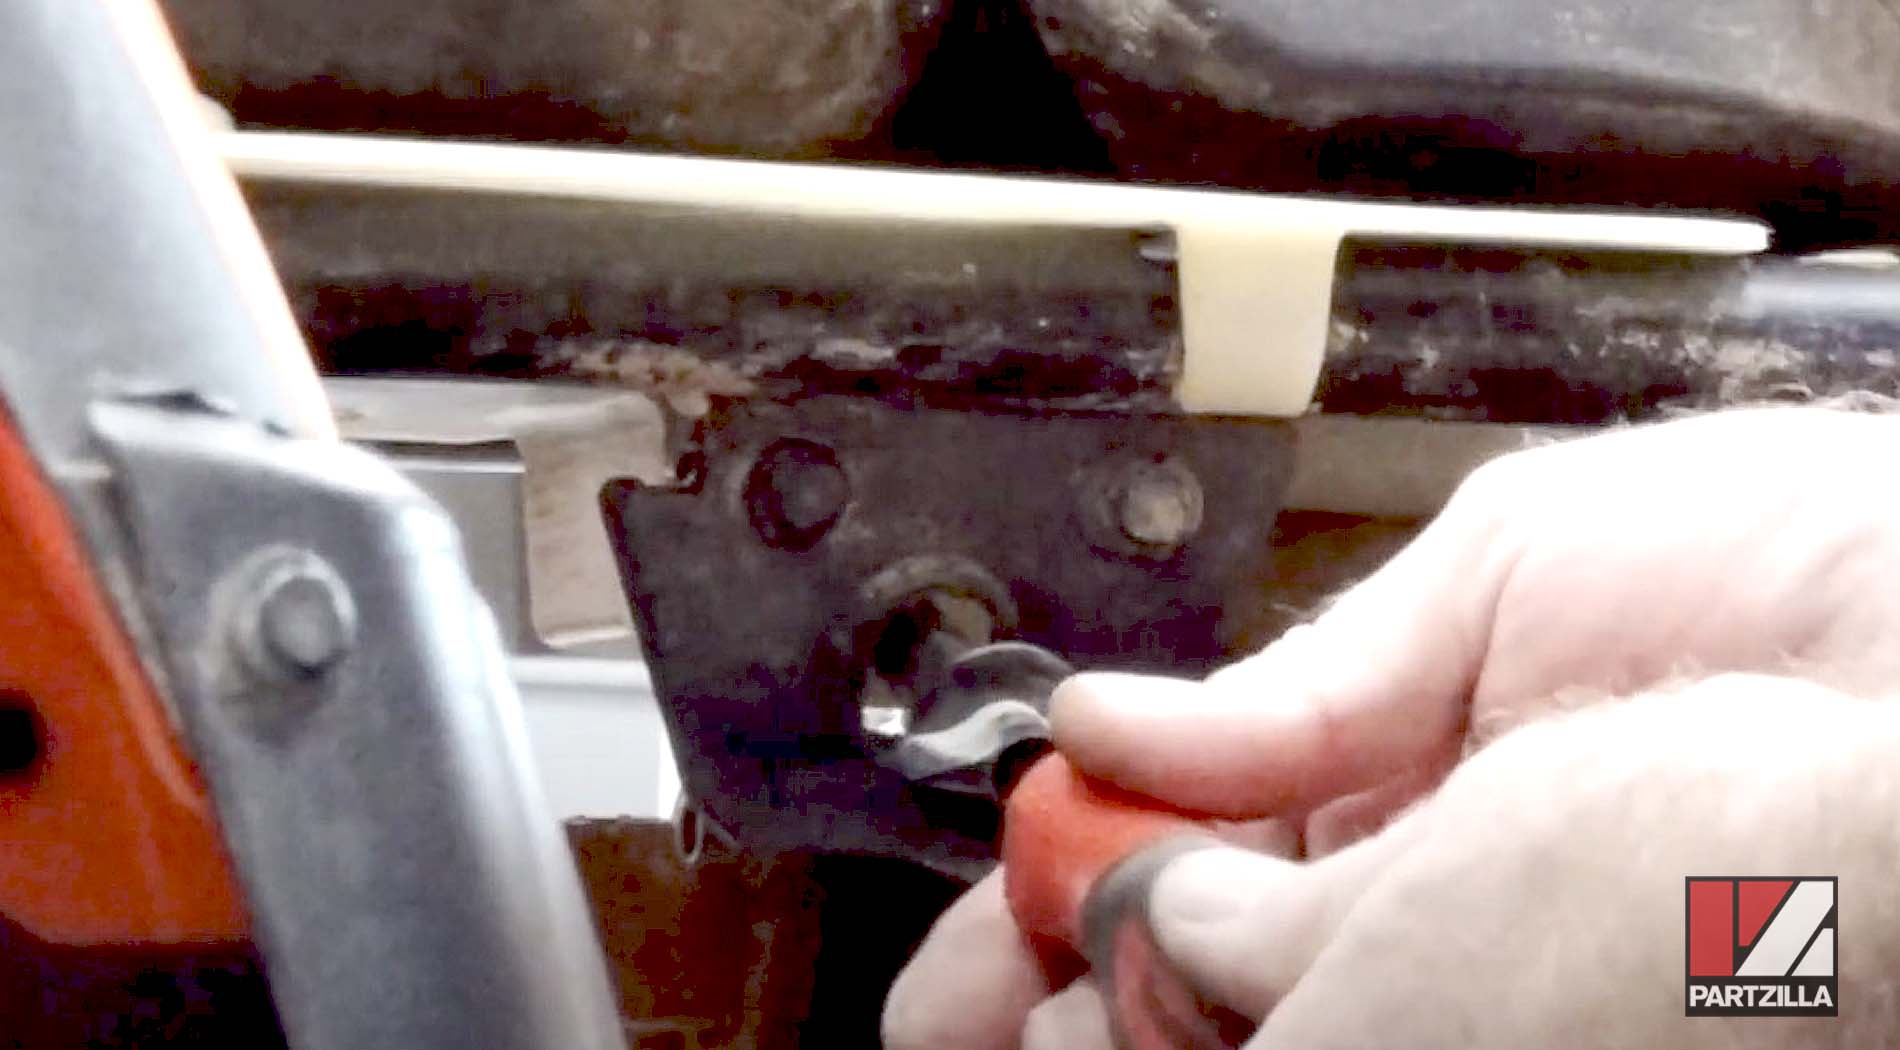 Honda Rancher TRX350 engine rebuild TDC inspection plug